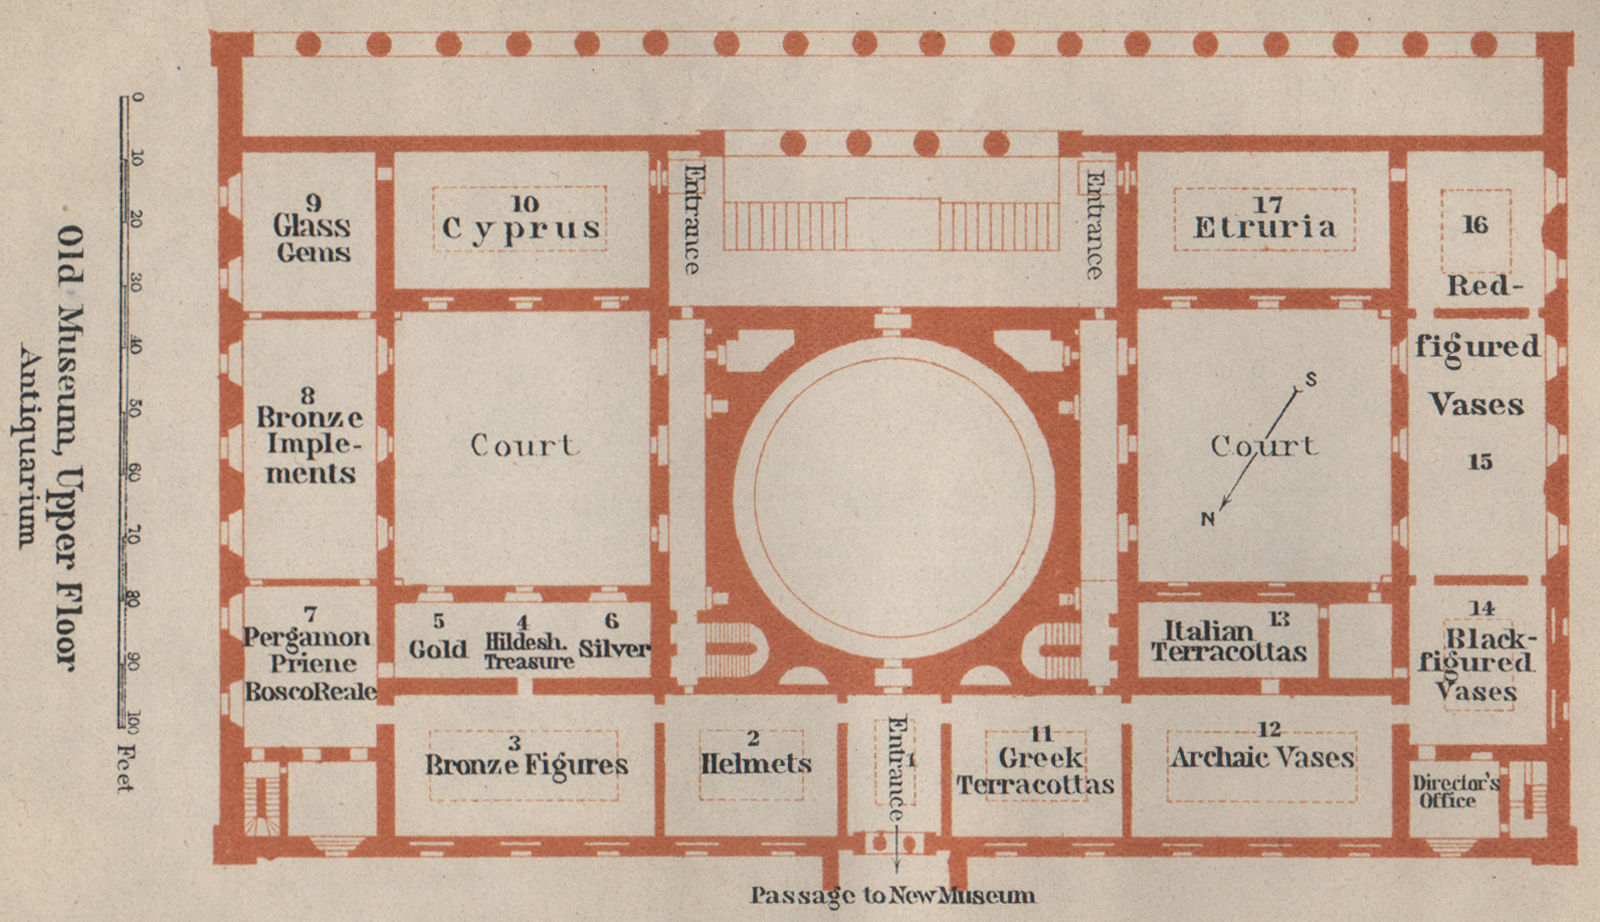 ALTES/OLD MUSEUM Berlin. Upper floor plan. Antiquarium karte. SMALL 1910 map